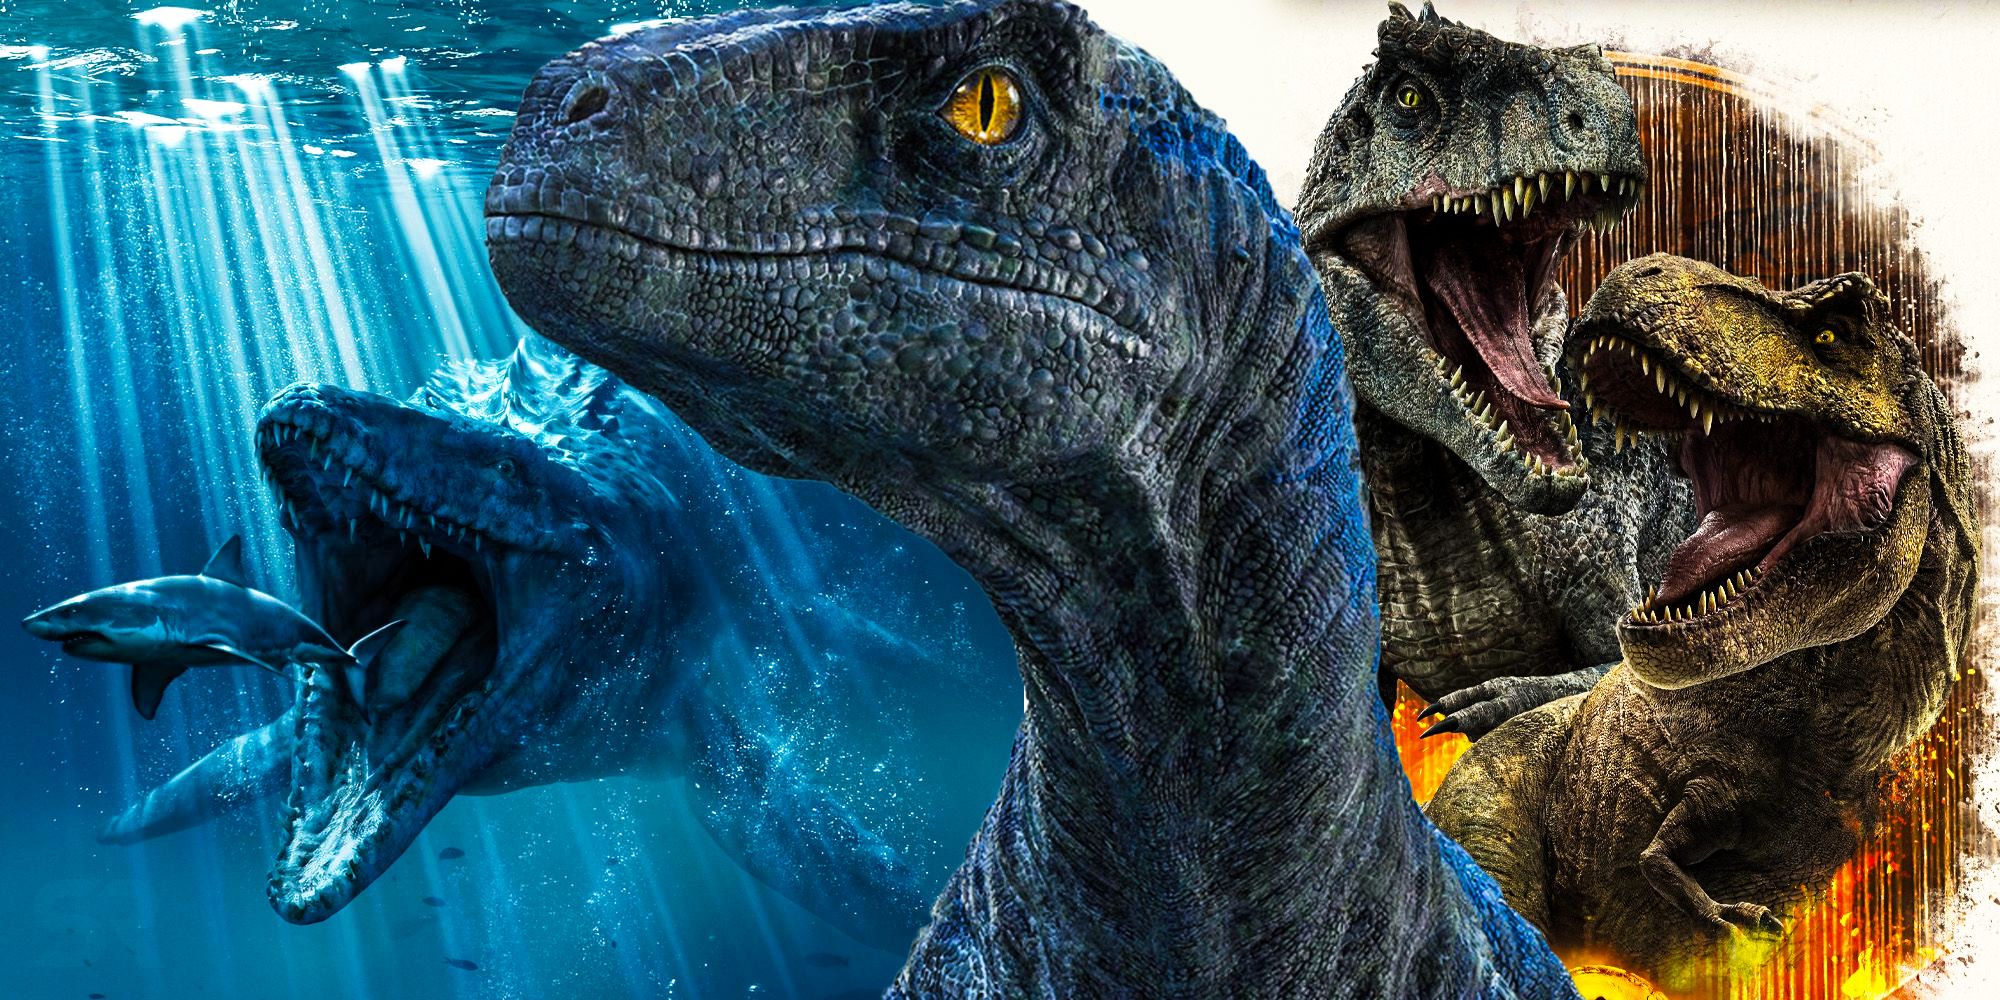 https://static1.srcdn.com/wordpress/wp-content/uploads/2022/07/Jurassic-World-Dominion-Blue-Raptors-Mosasaurus.jpg